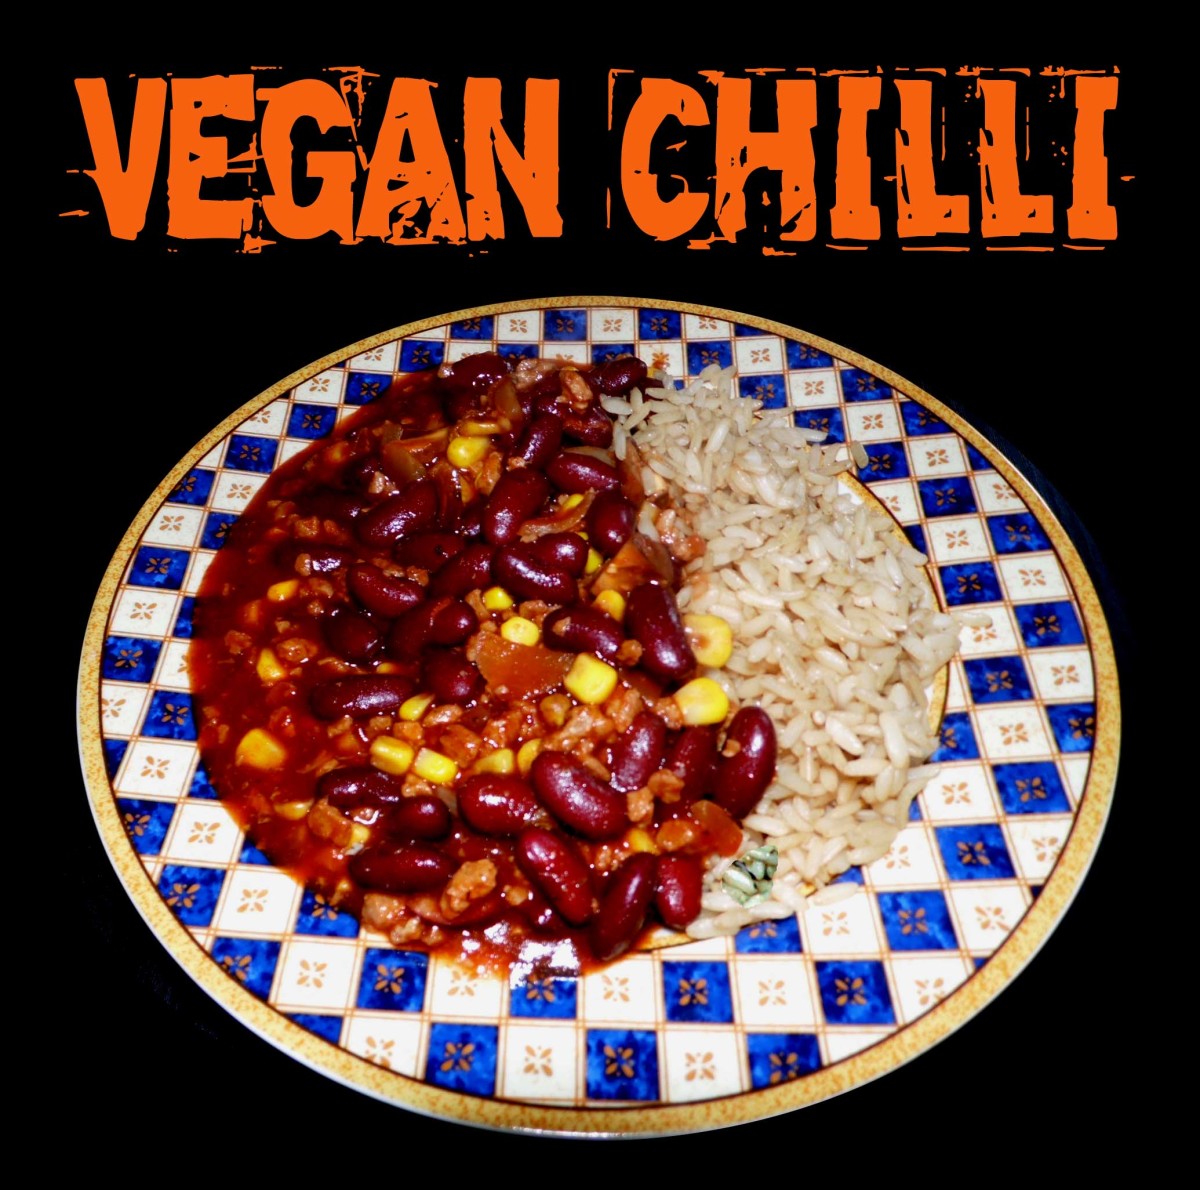 Vegan chilli with rice